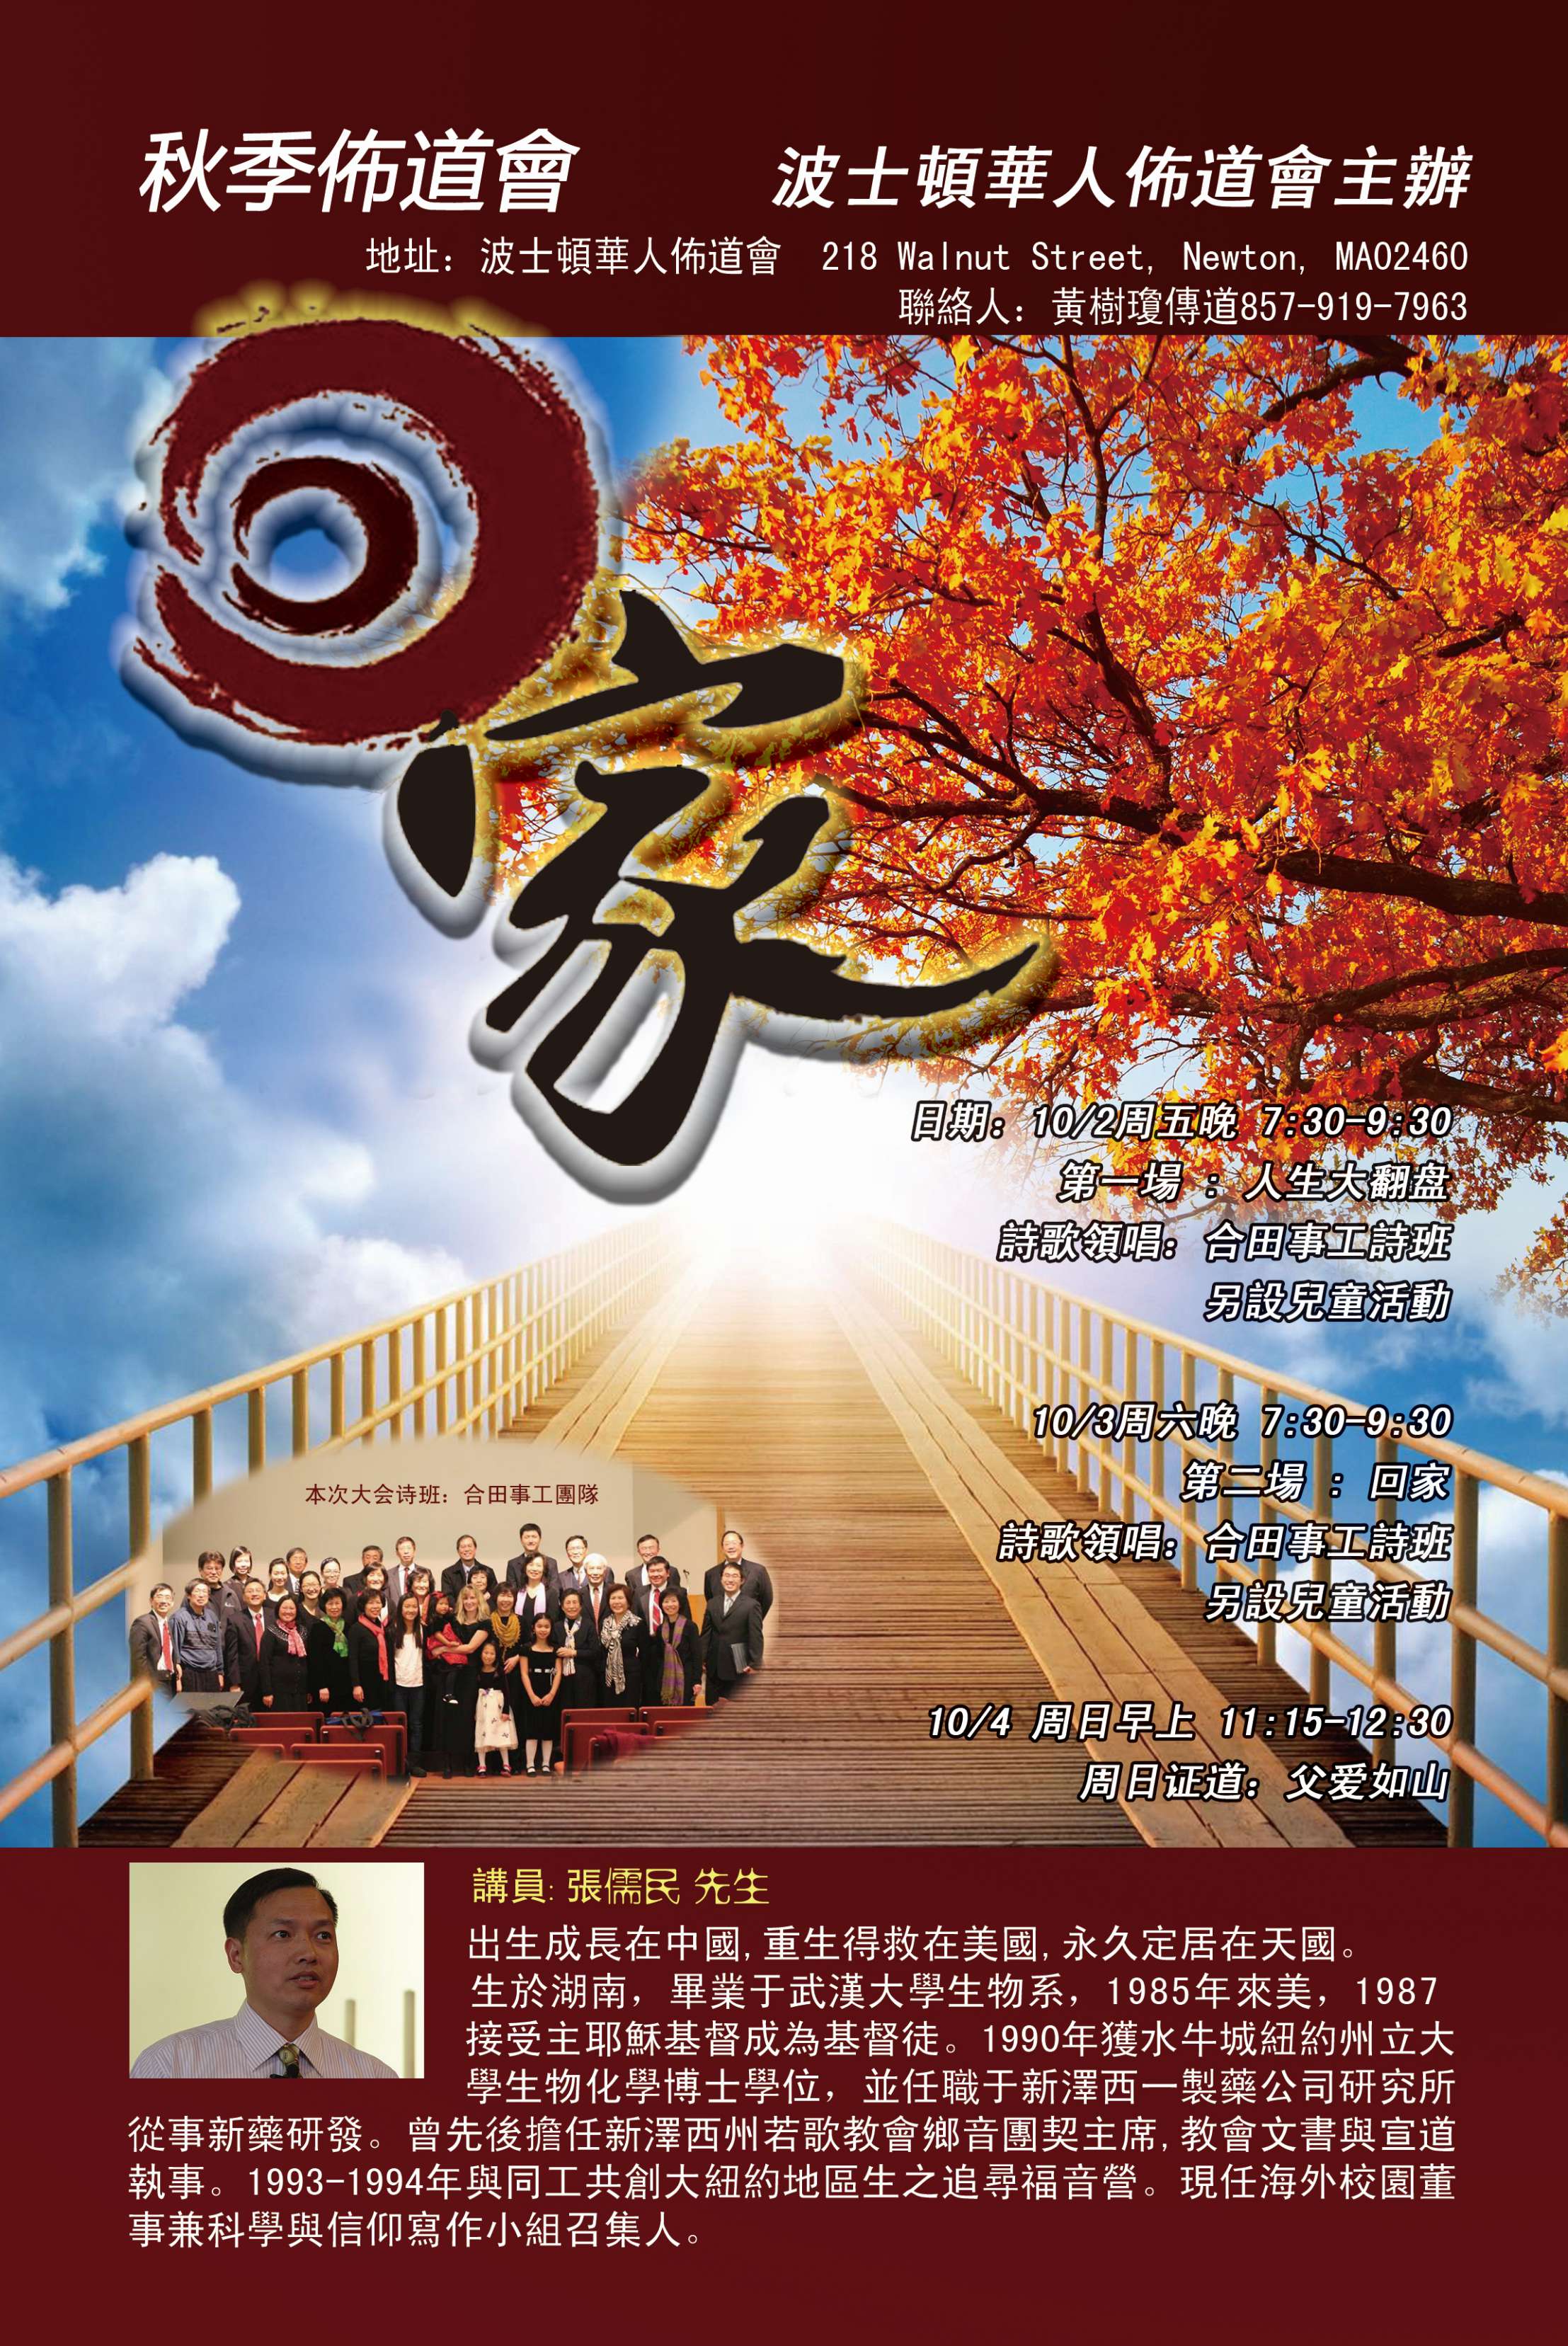 2015 NT Evangelistic Poster